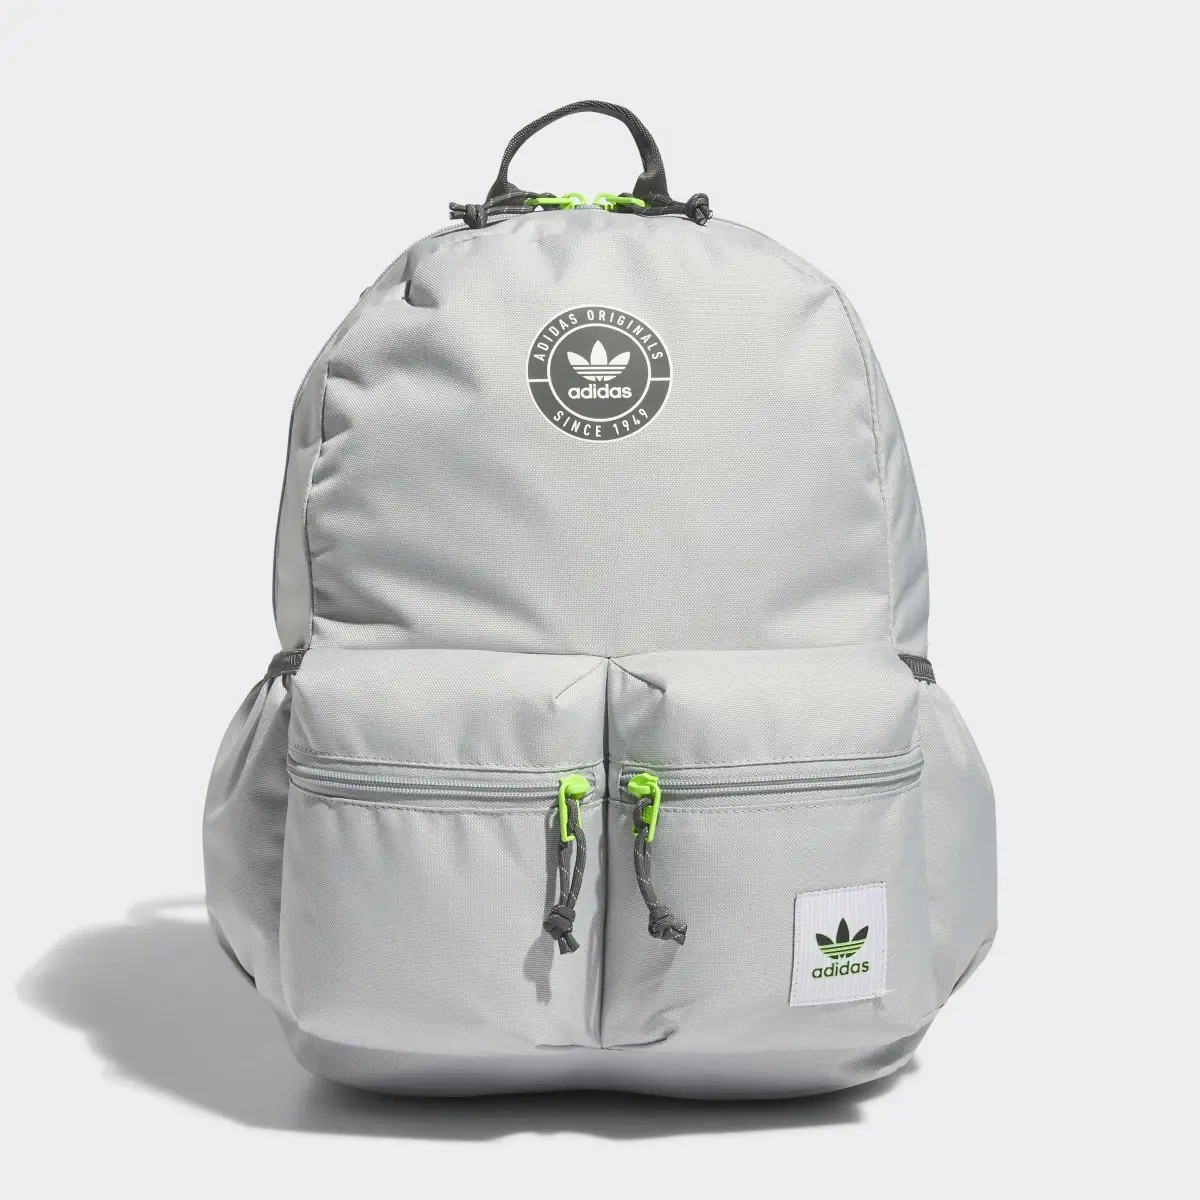 Adidas Trefoil 3.0 Backpack. 2